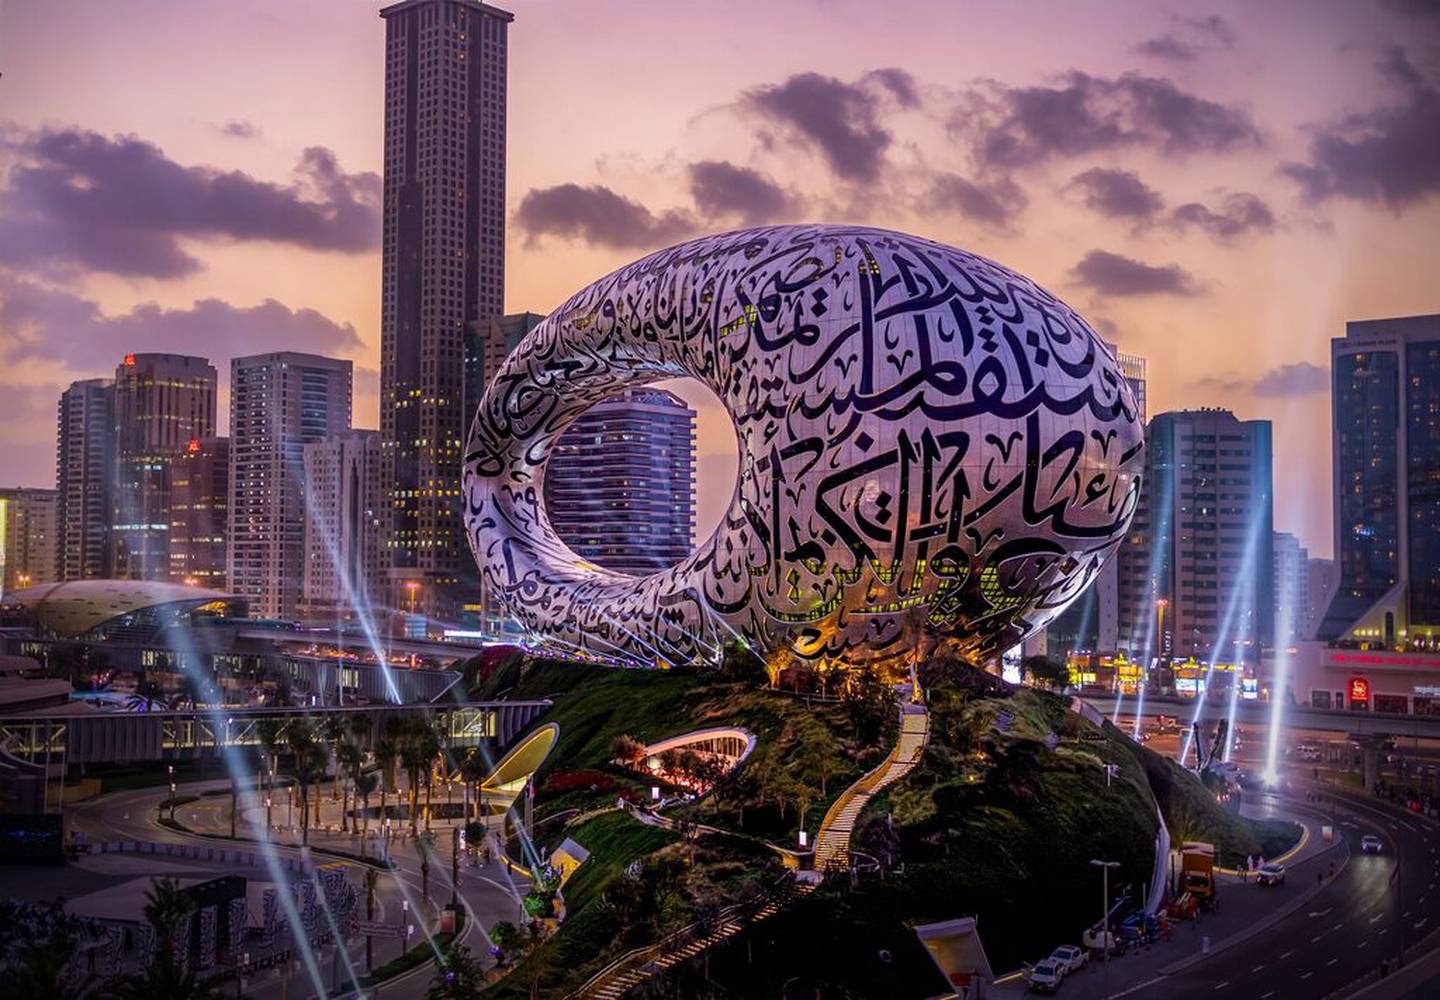 Dubai has an entire museum dedicated to futurism. DTCM